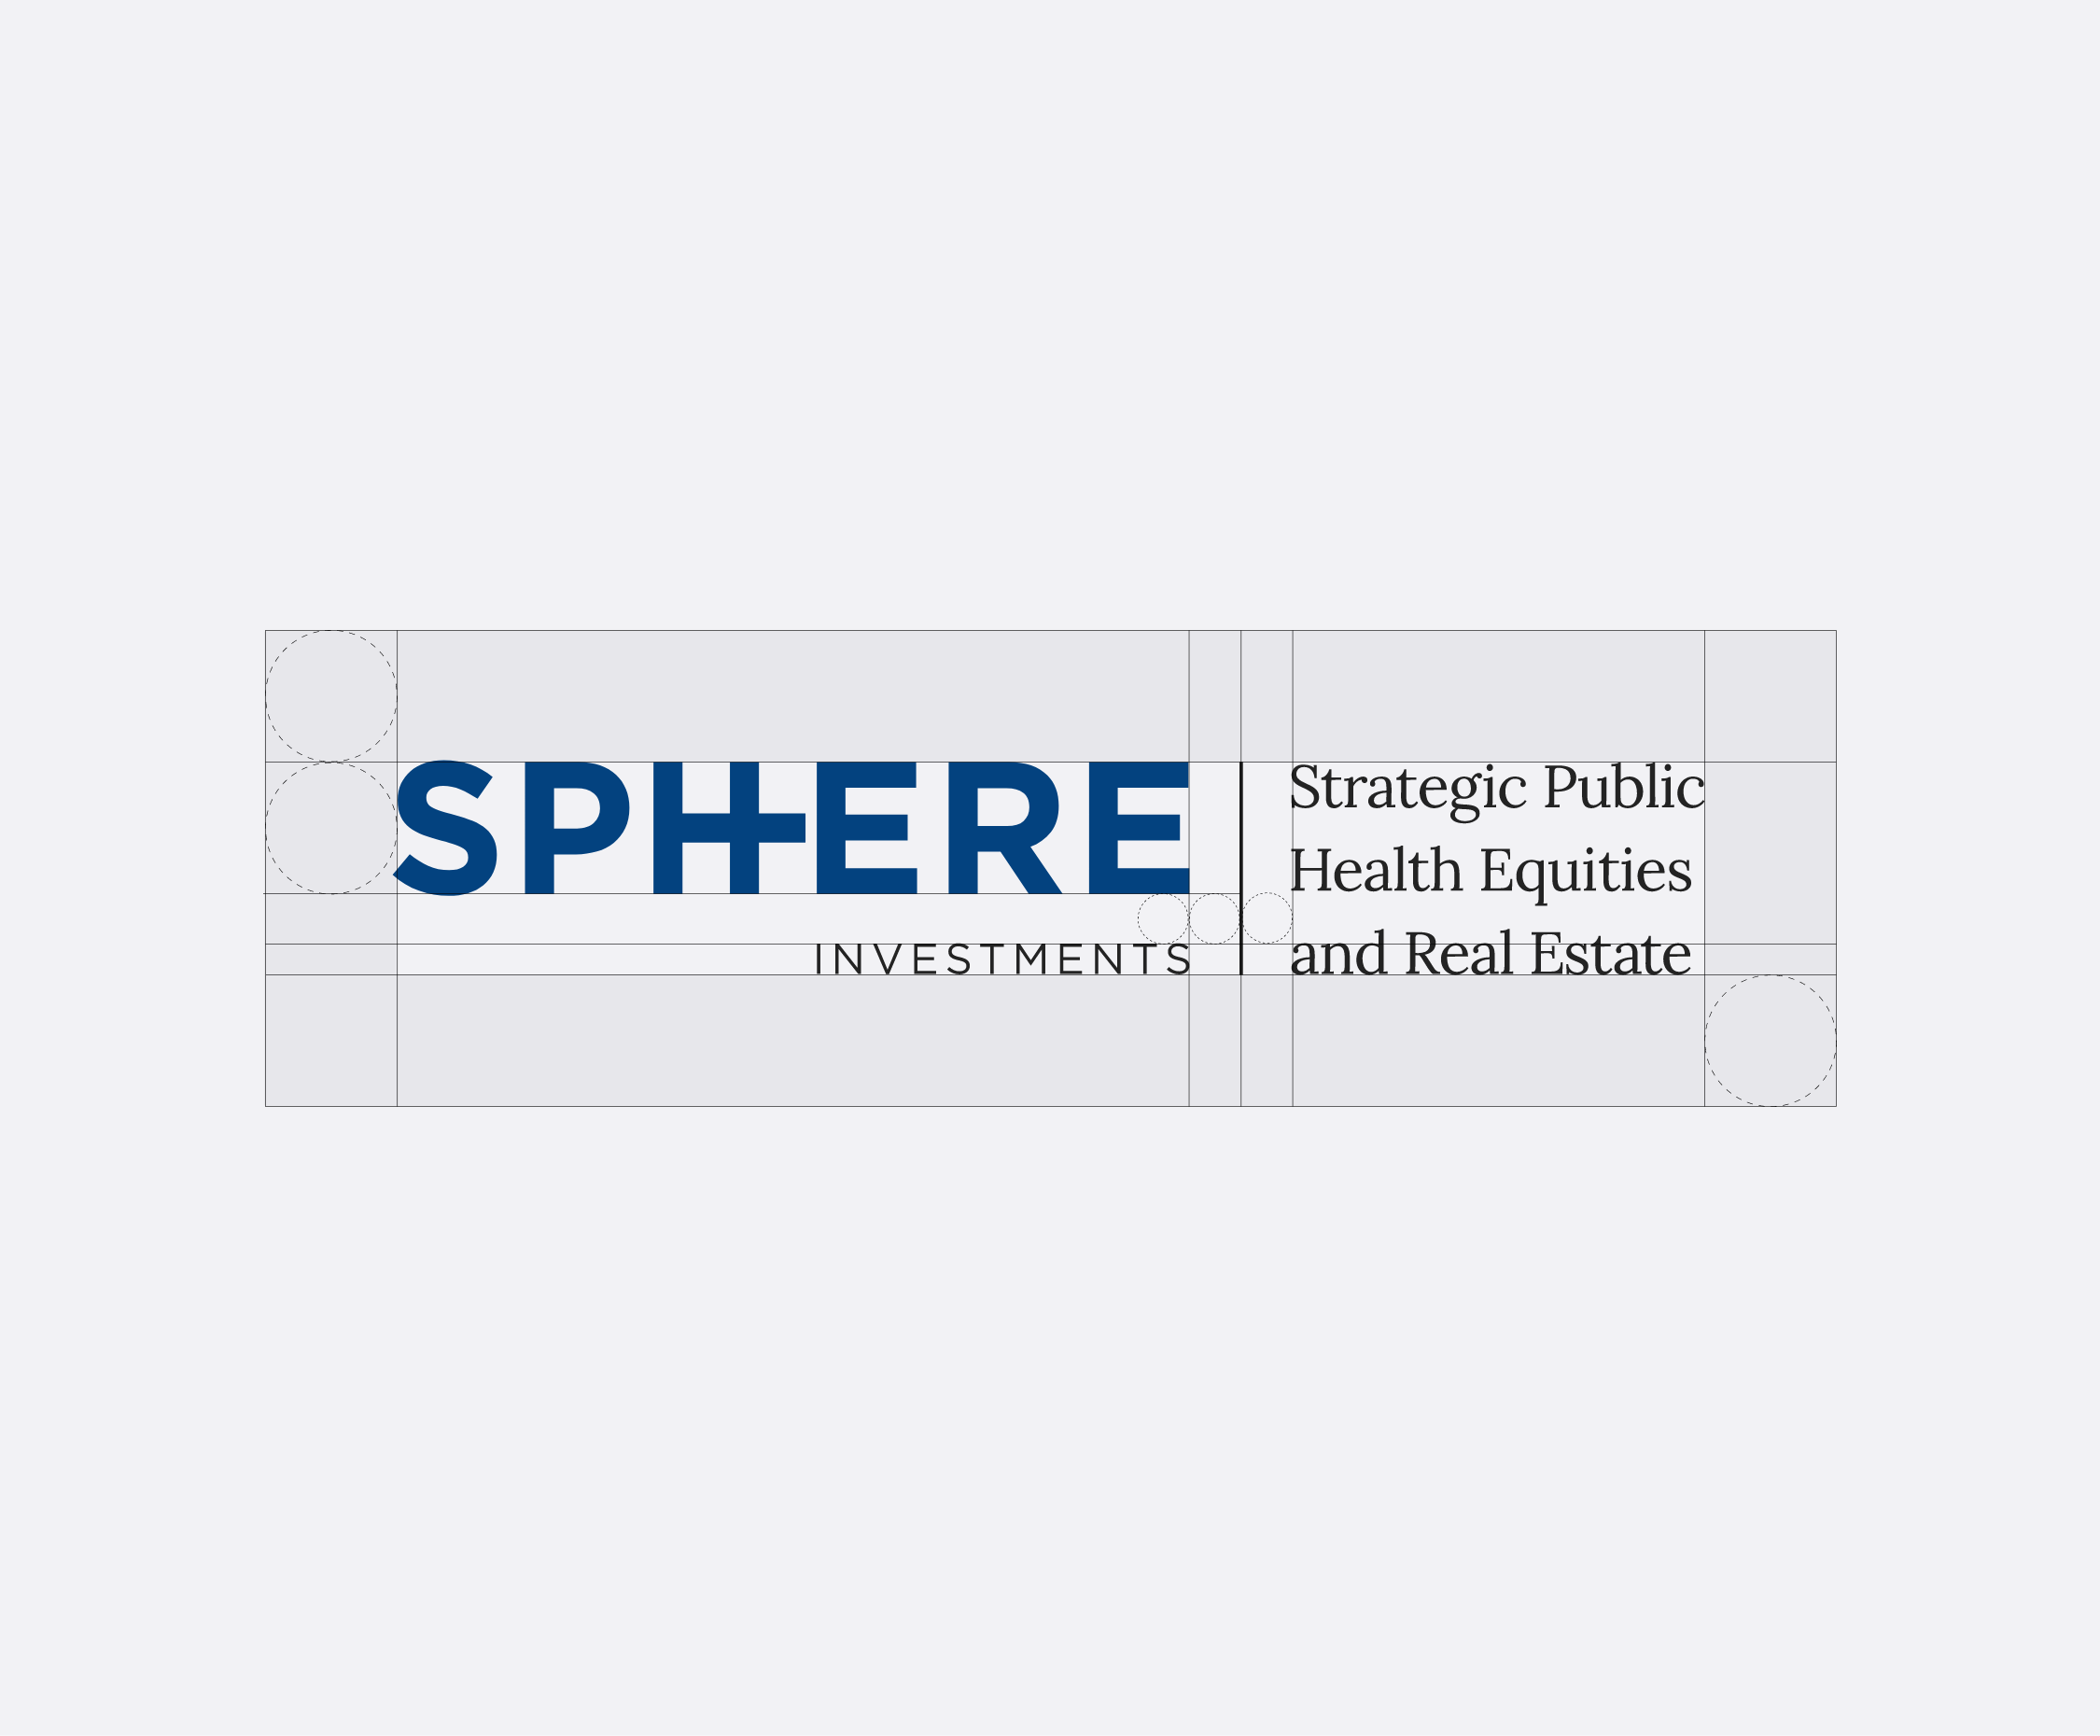 sphere logo diagram